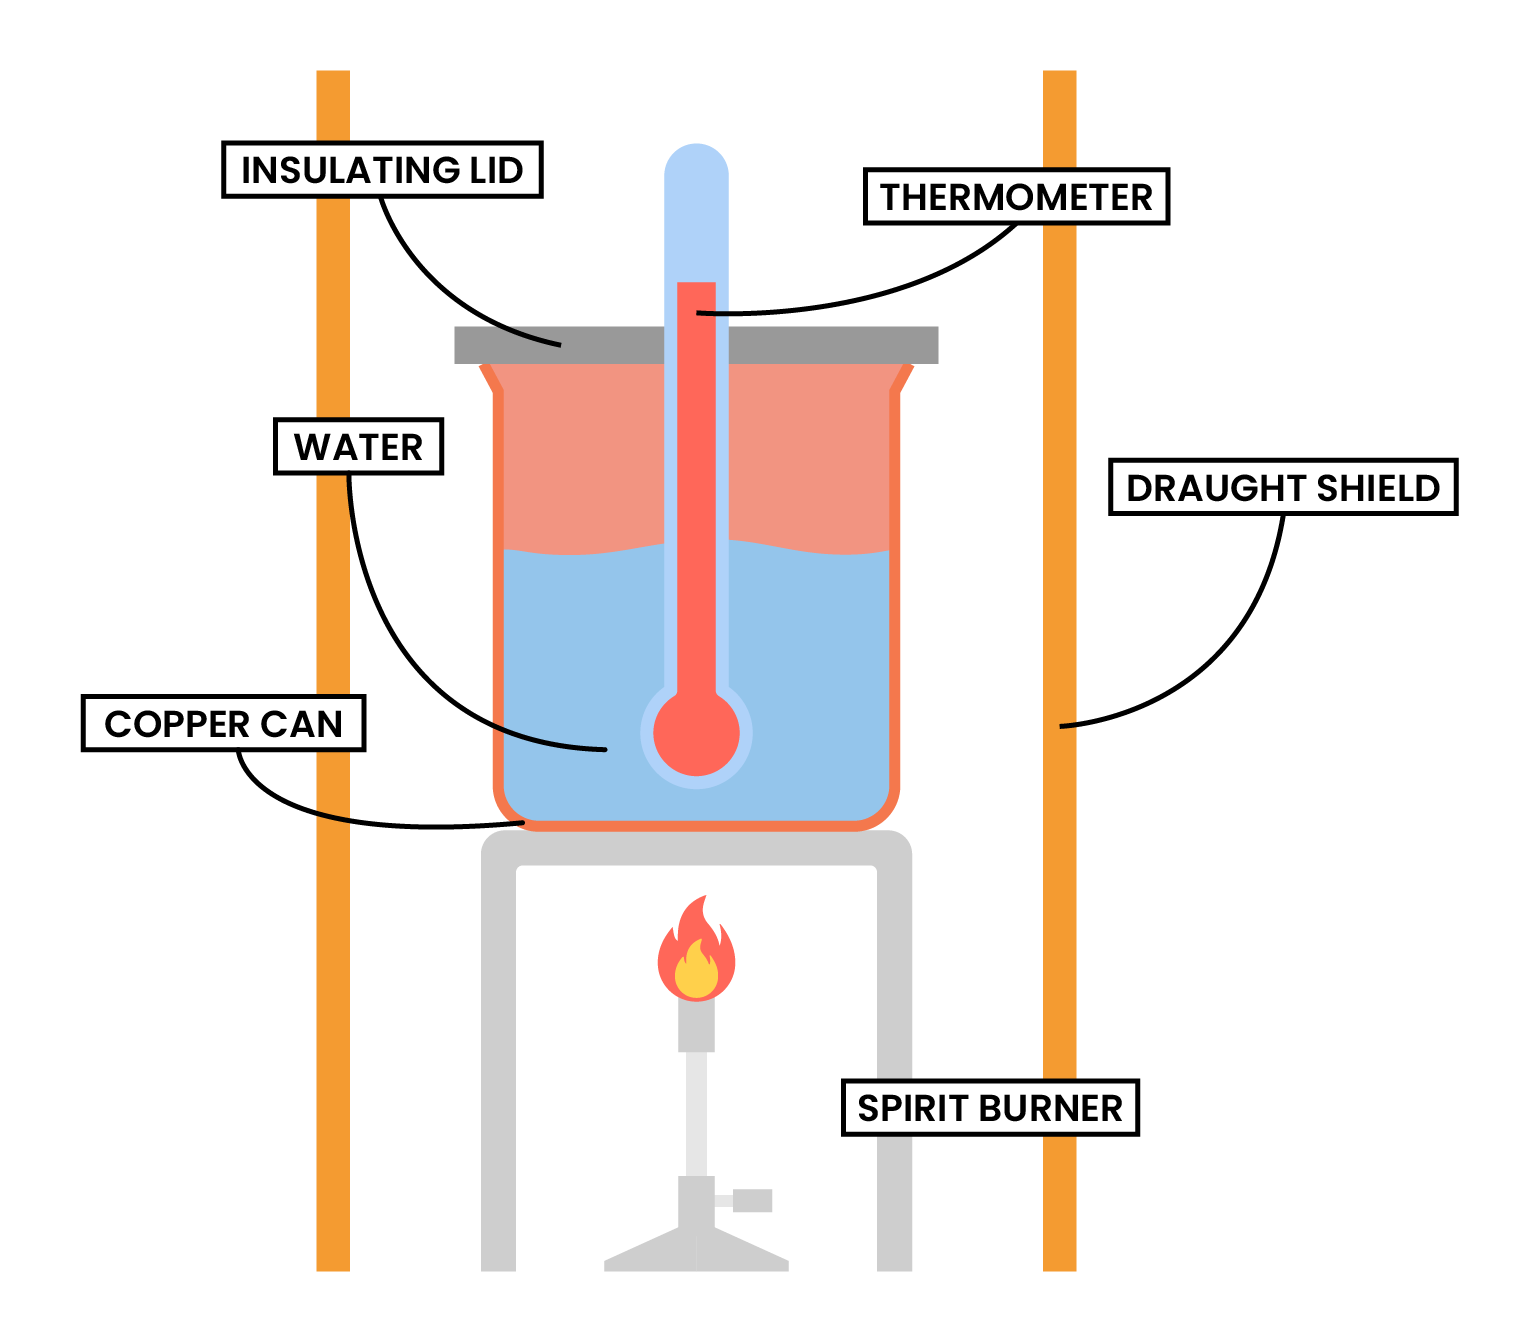 edexcel_igcse_chemistry_topic 18_energetics_004_calorimetry labelled diagram process apparatus set up